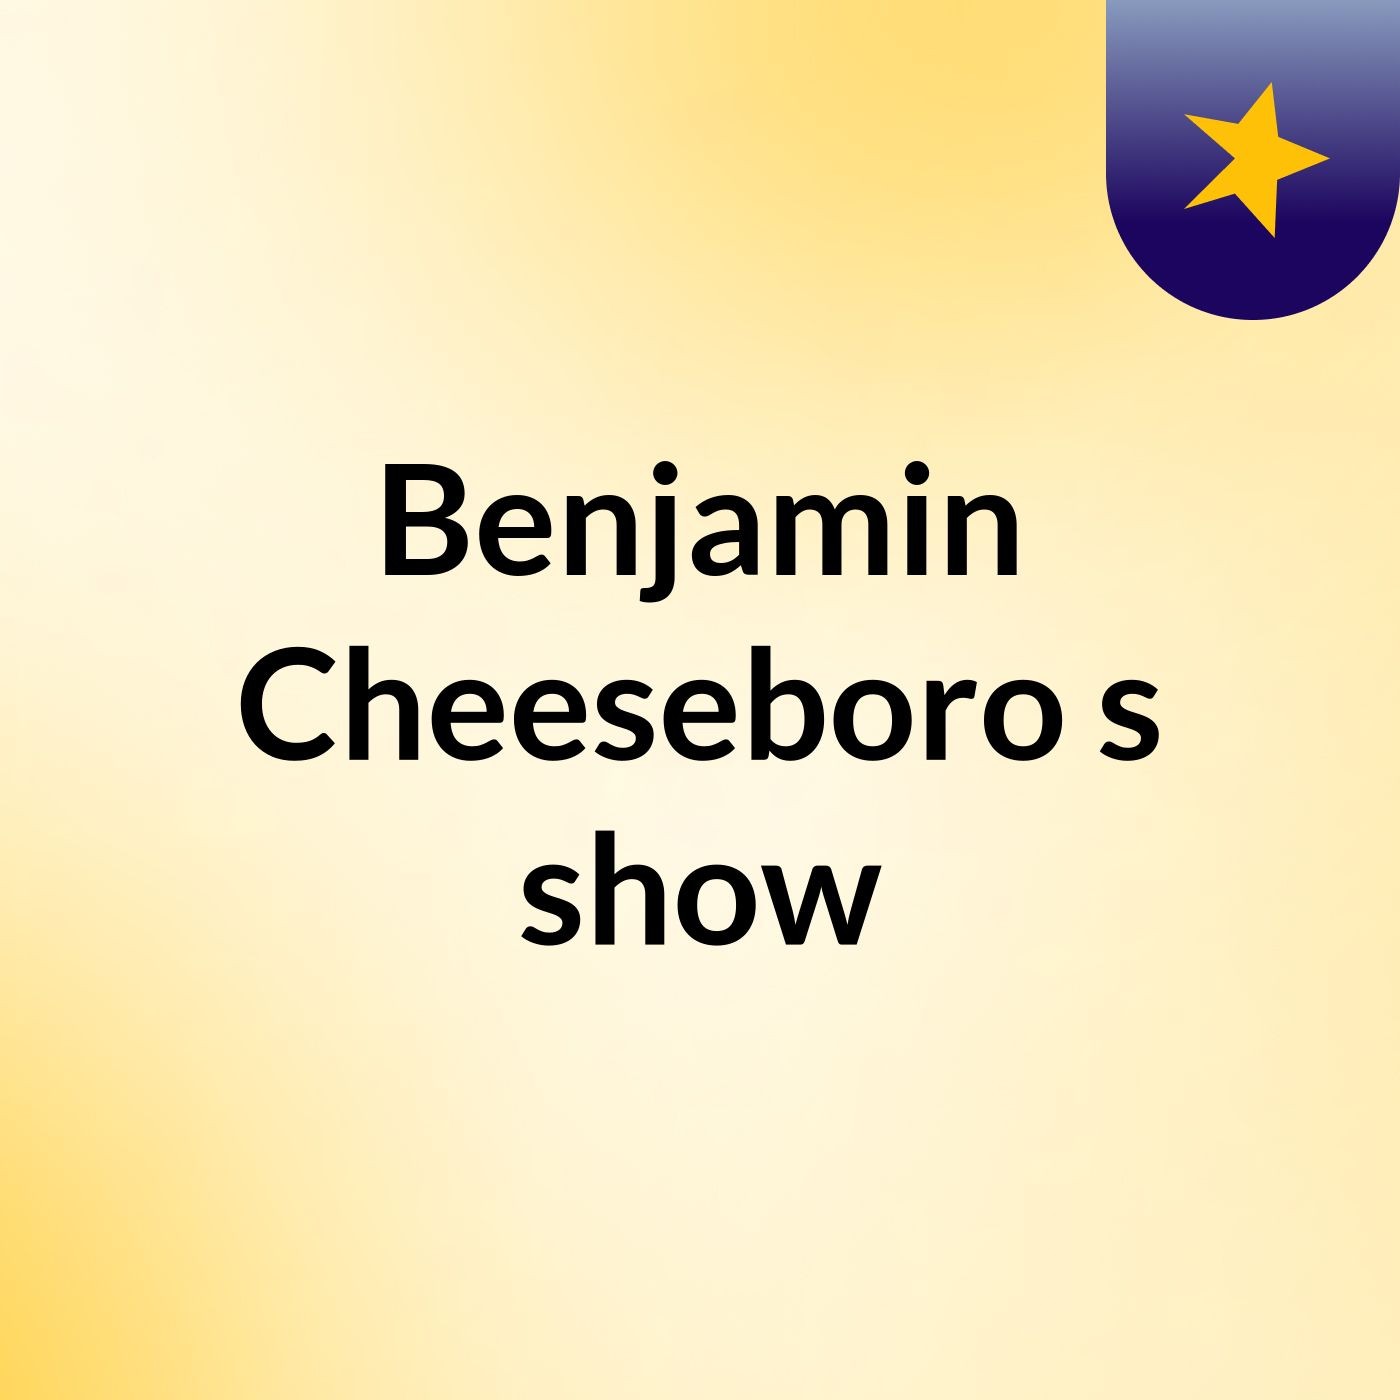 Benjamin Cheeseboro's show